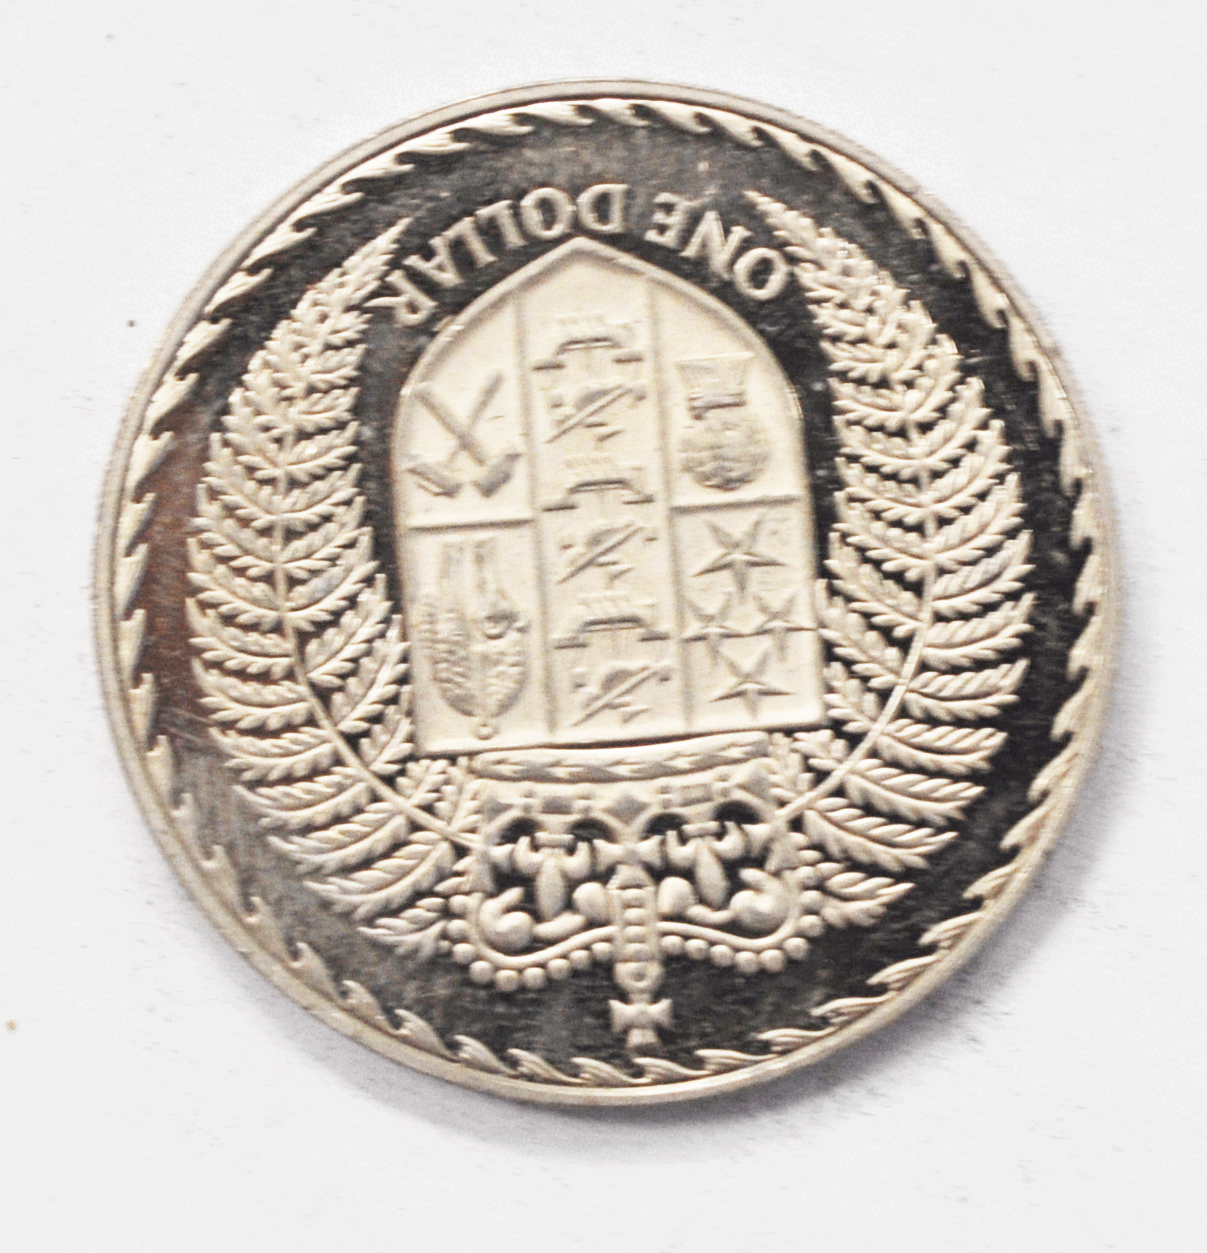 1976 New Zealand Dollar Copper Nickel Coin Low Mintage KM# 38.2